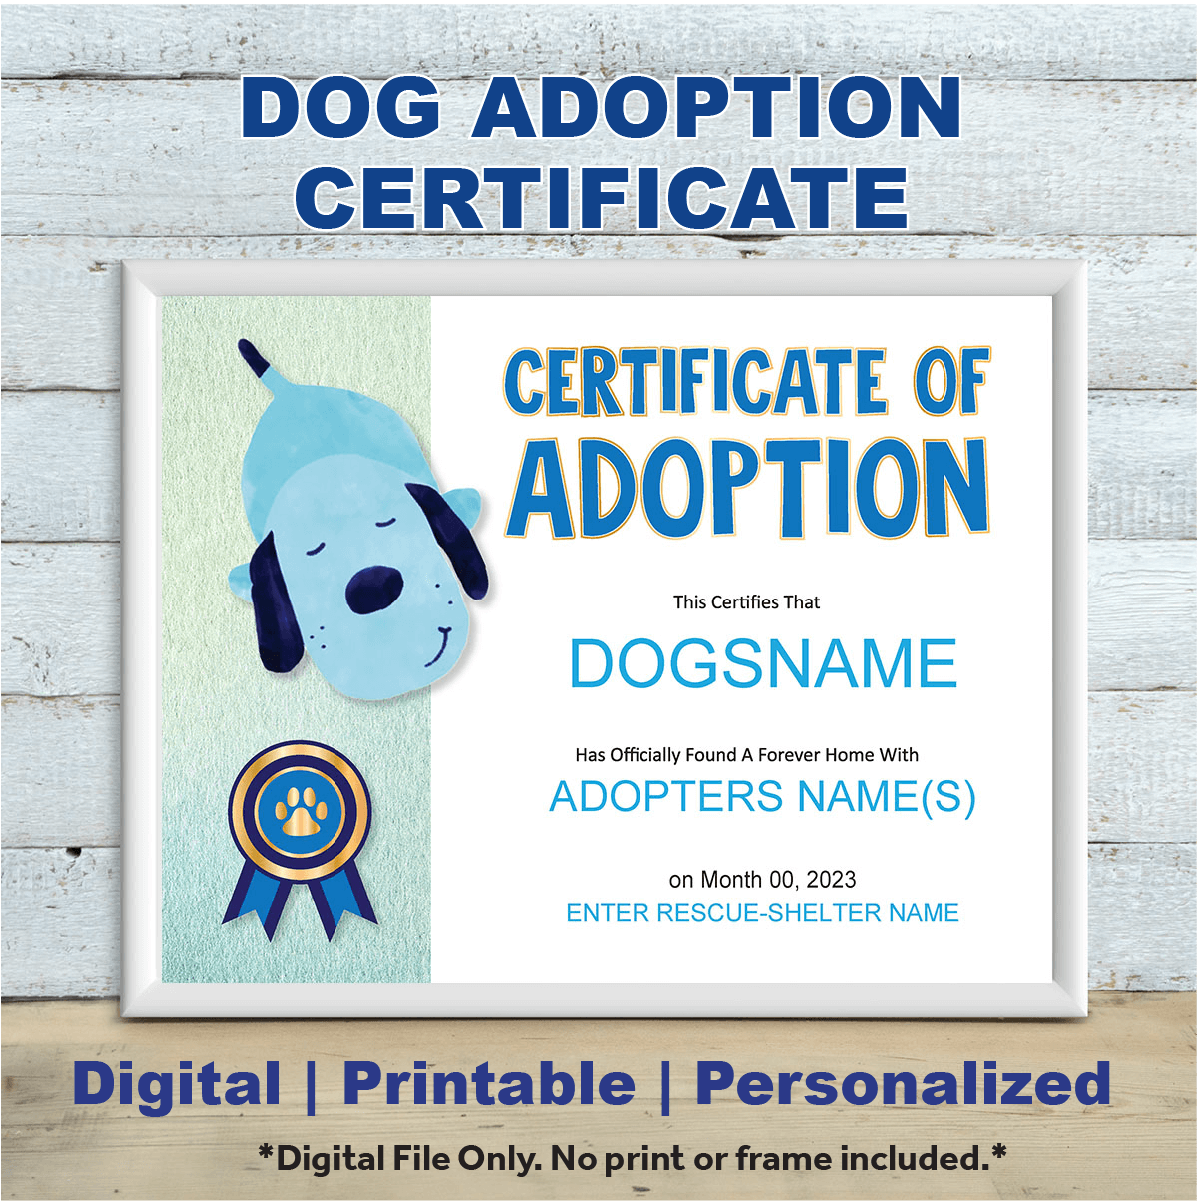 Custom Dog Adoption Certificate in a white frame